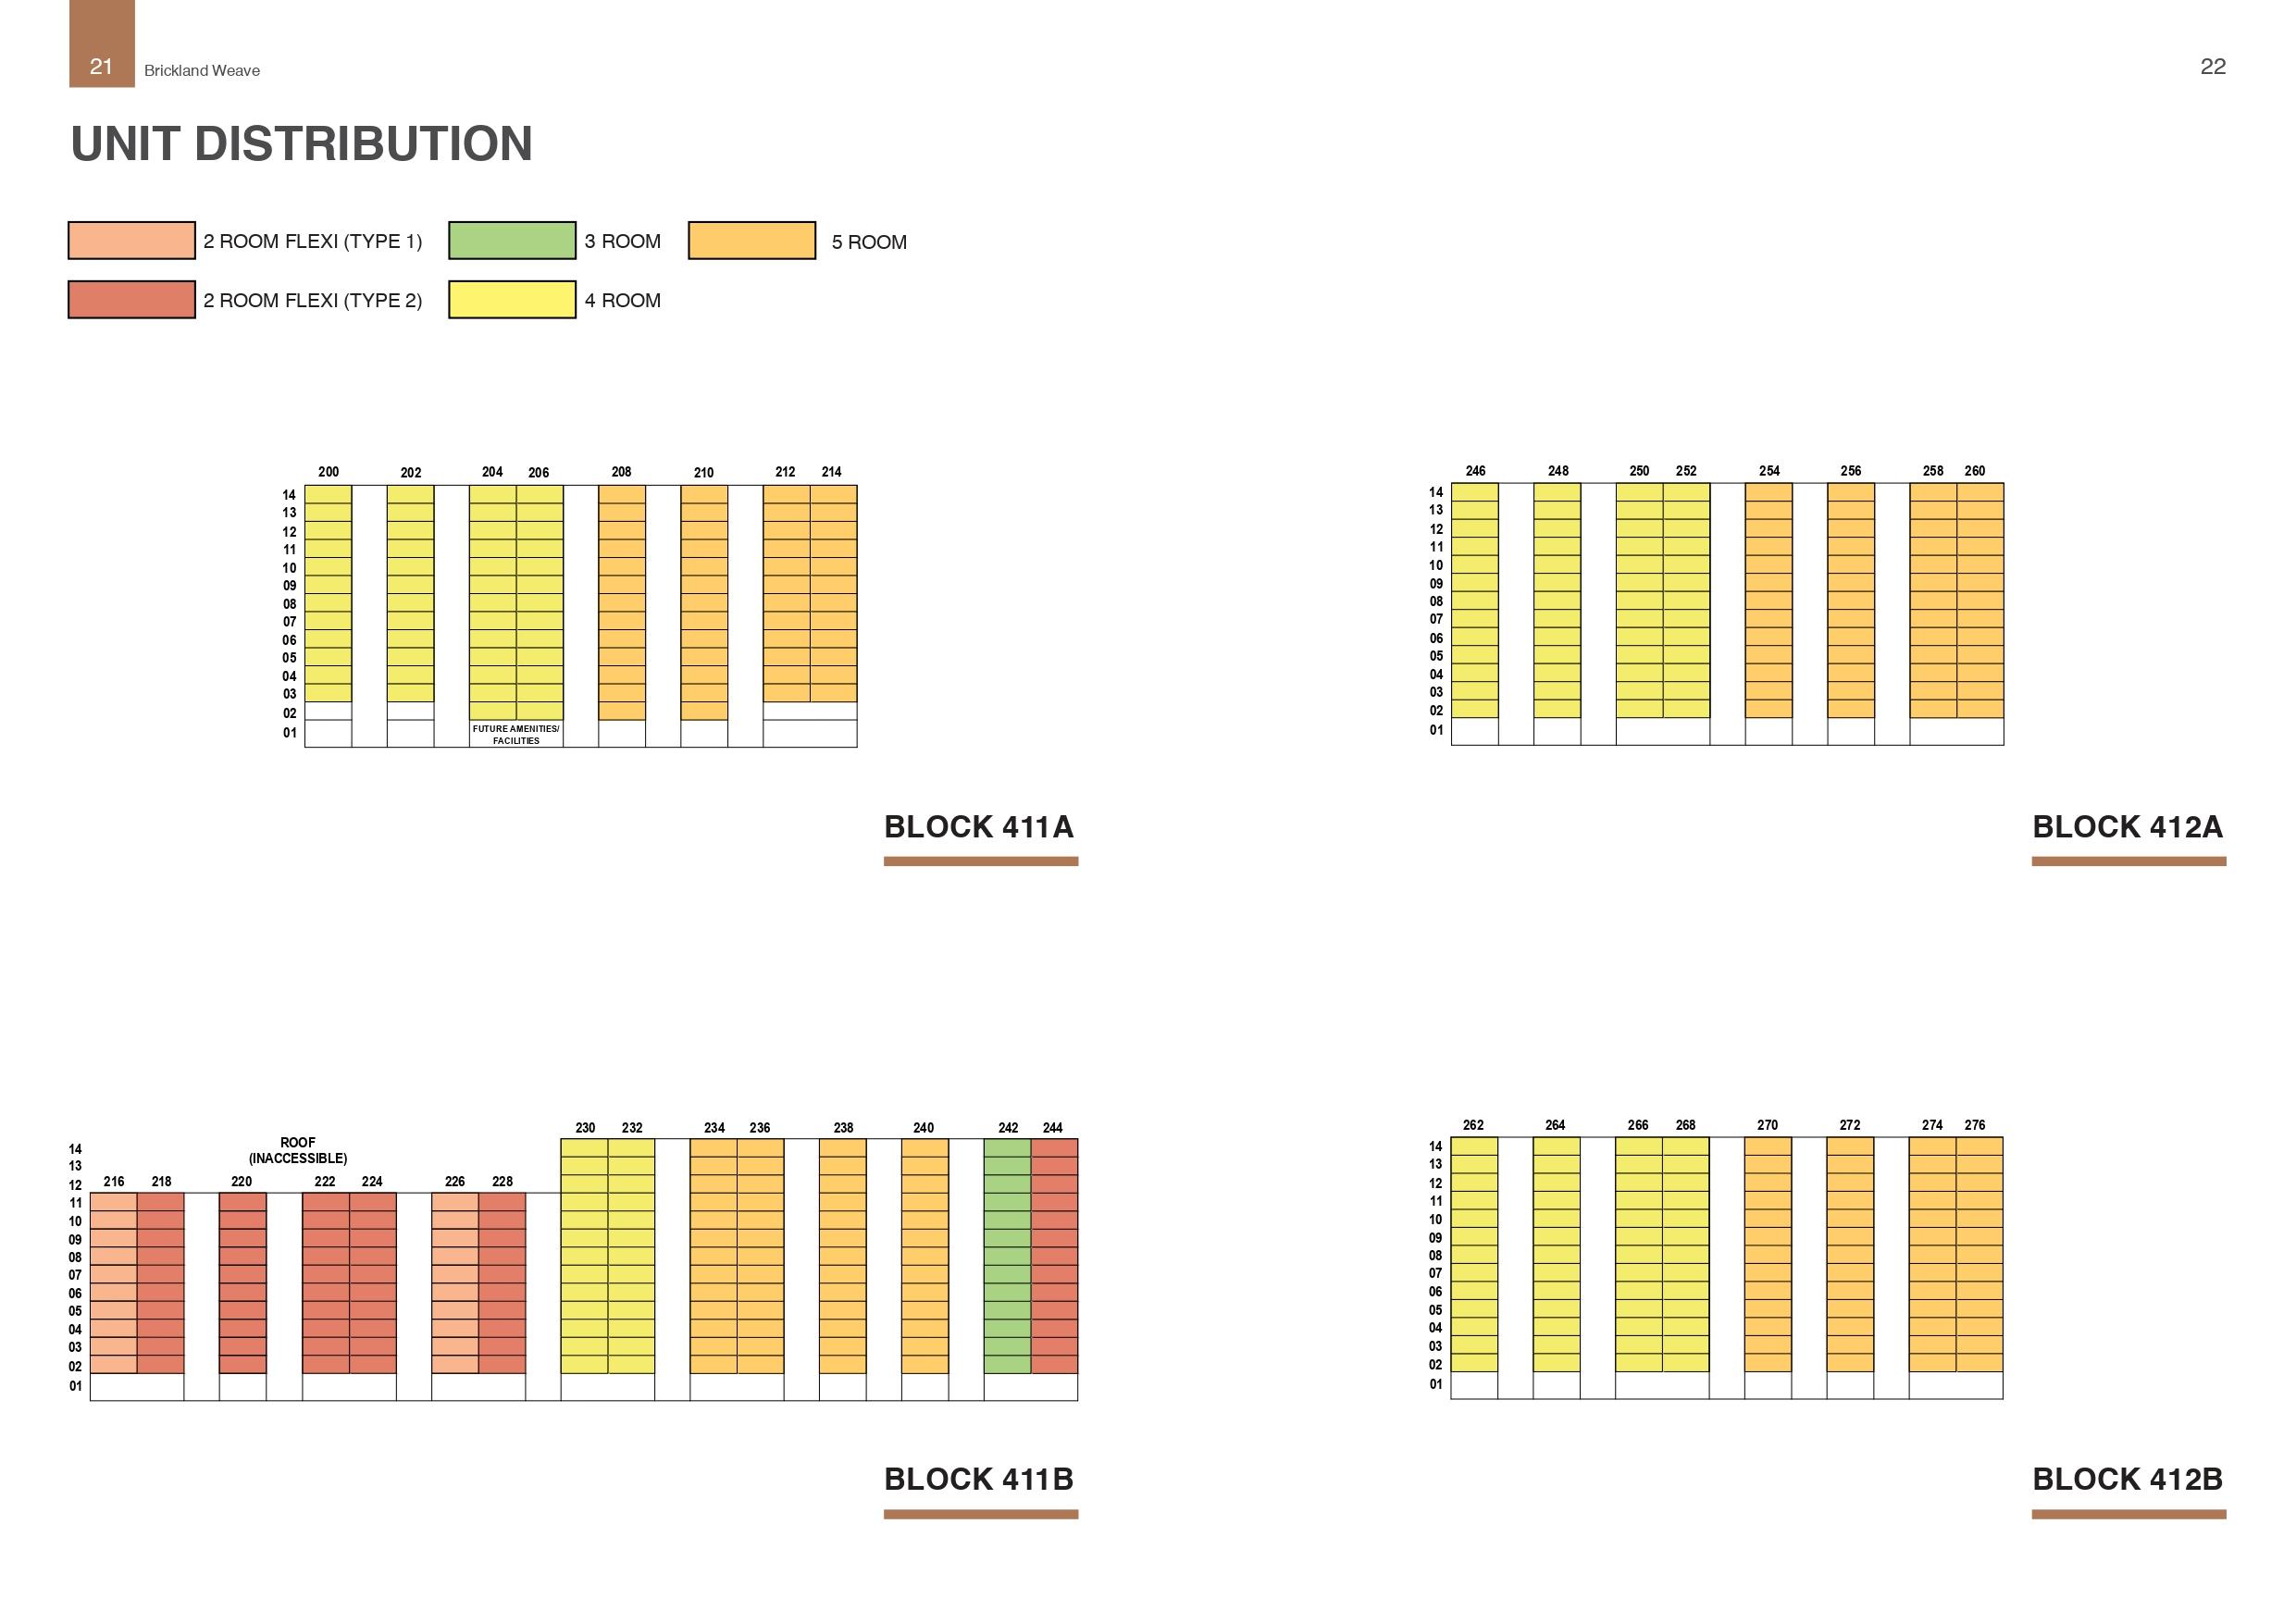 Brickland Weave unit-distribution